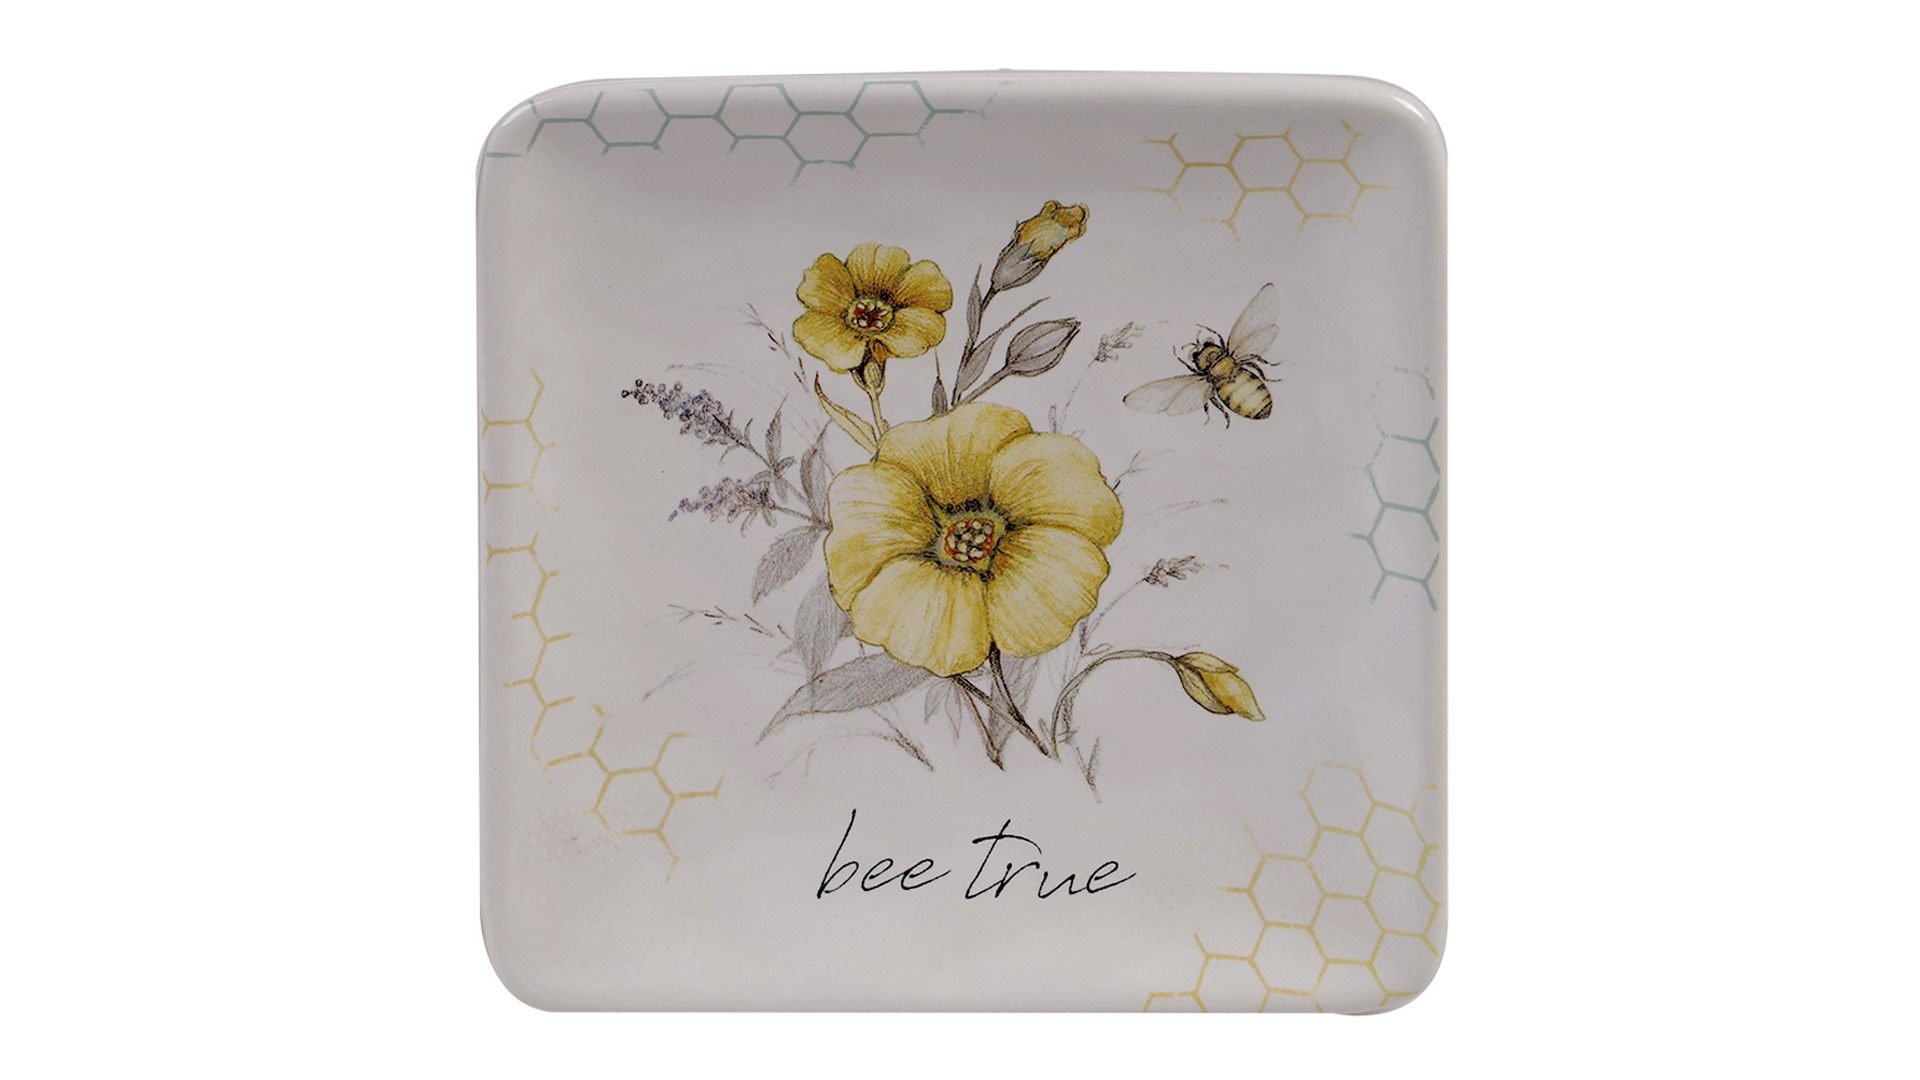 Тарелка пирожковая Certified Int. Пчелки 15х15 см, керамика